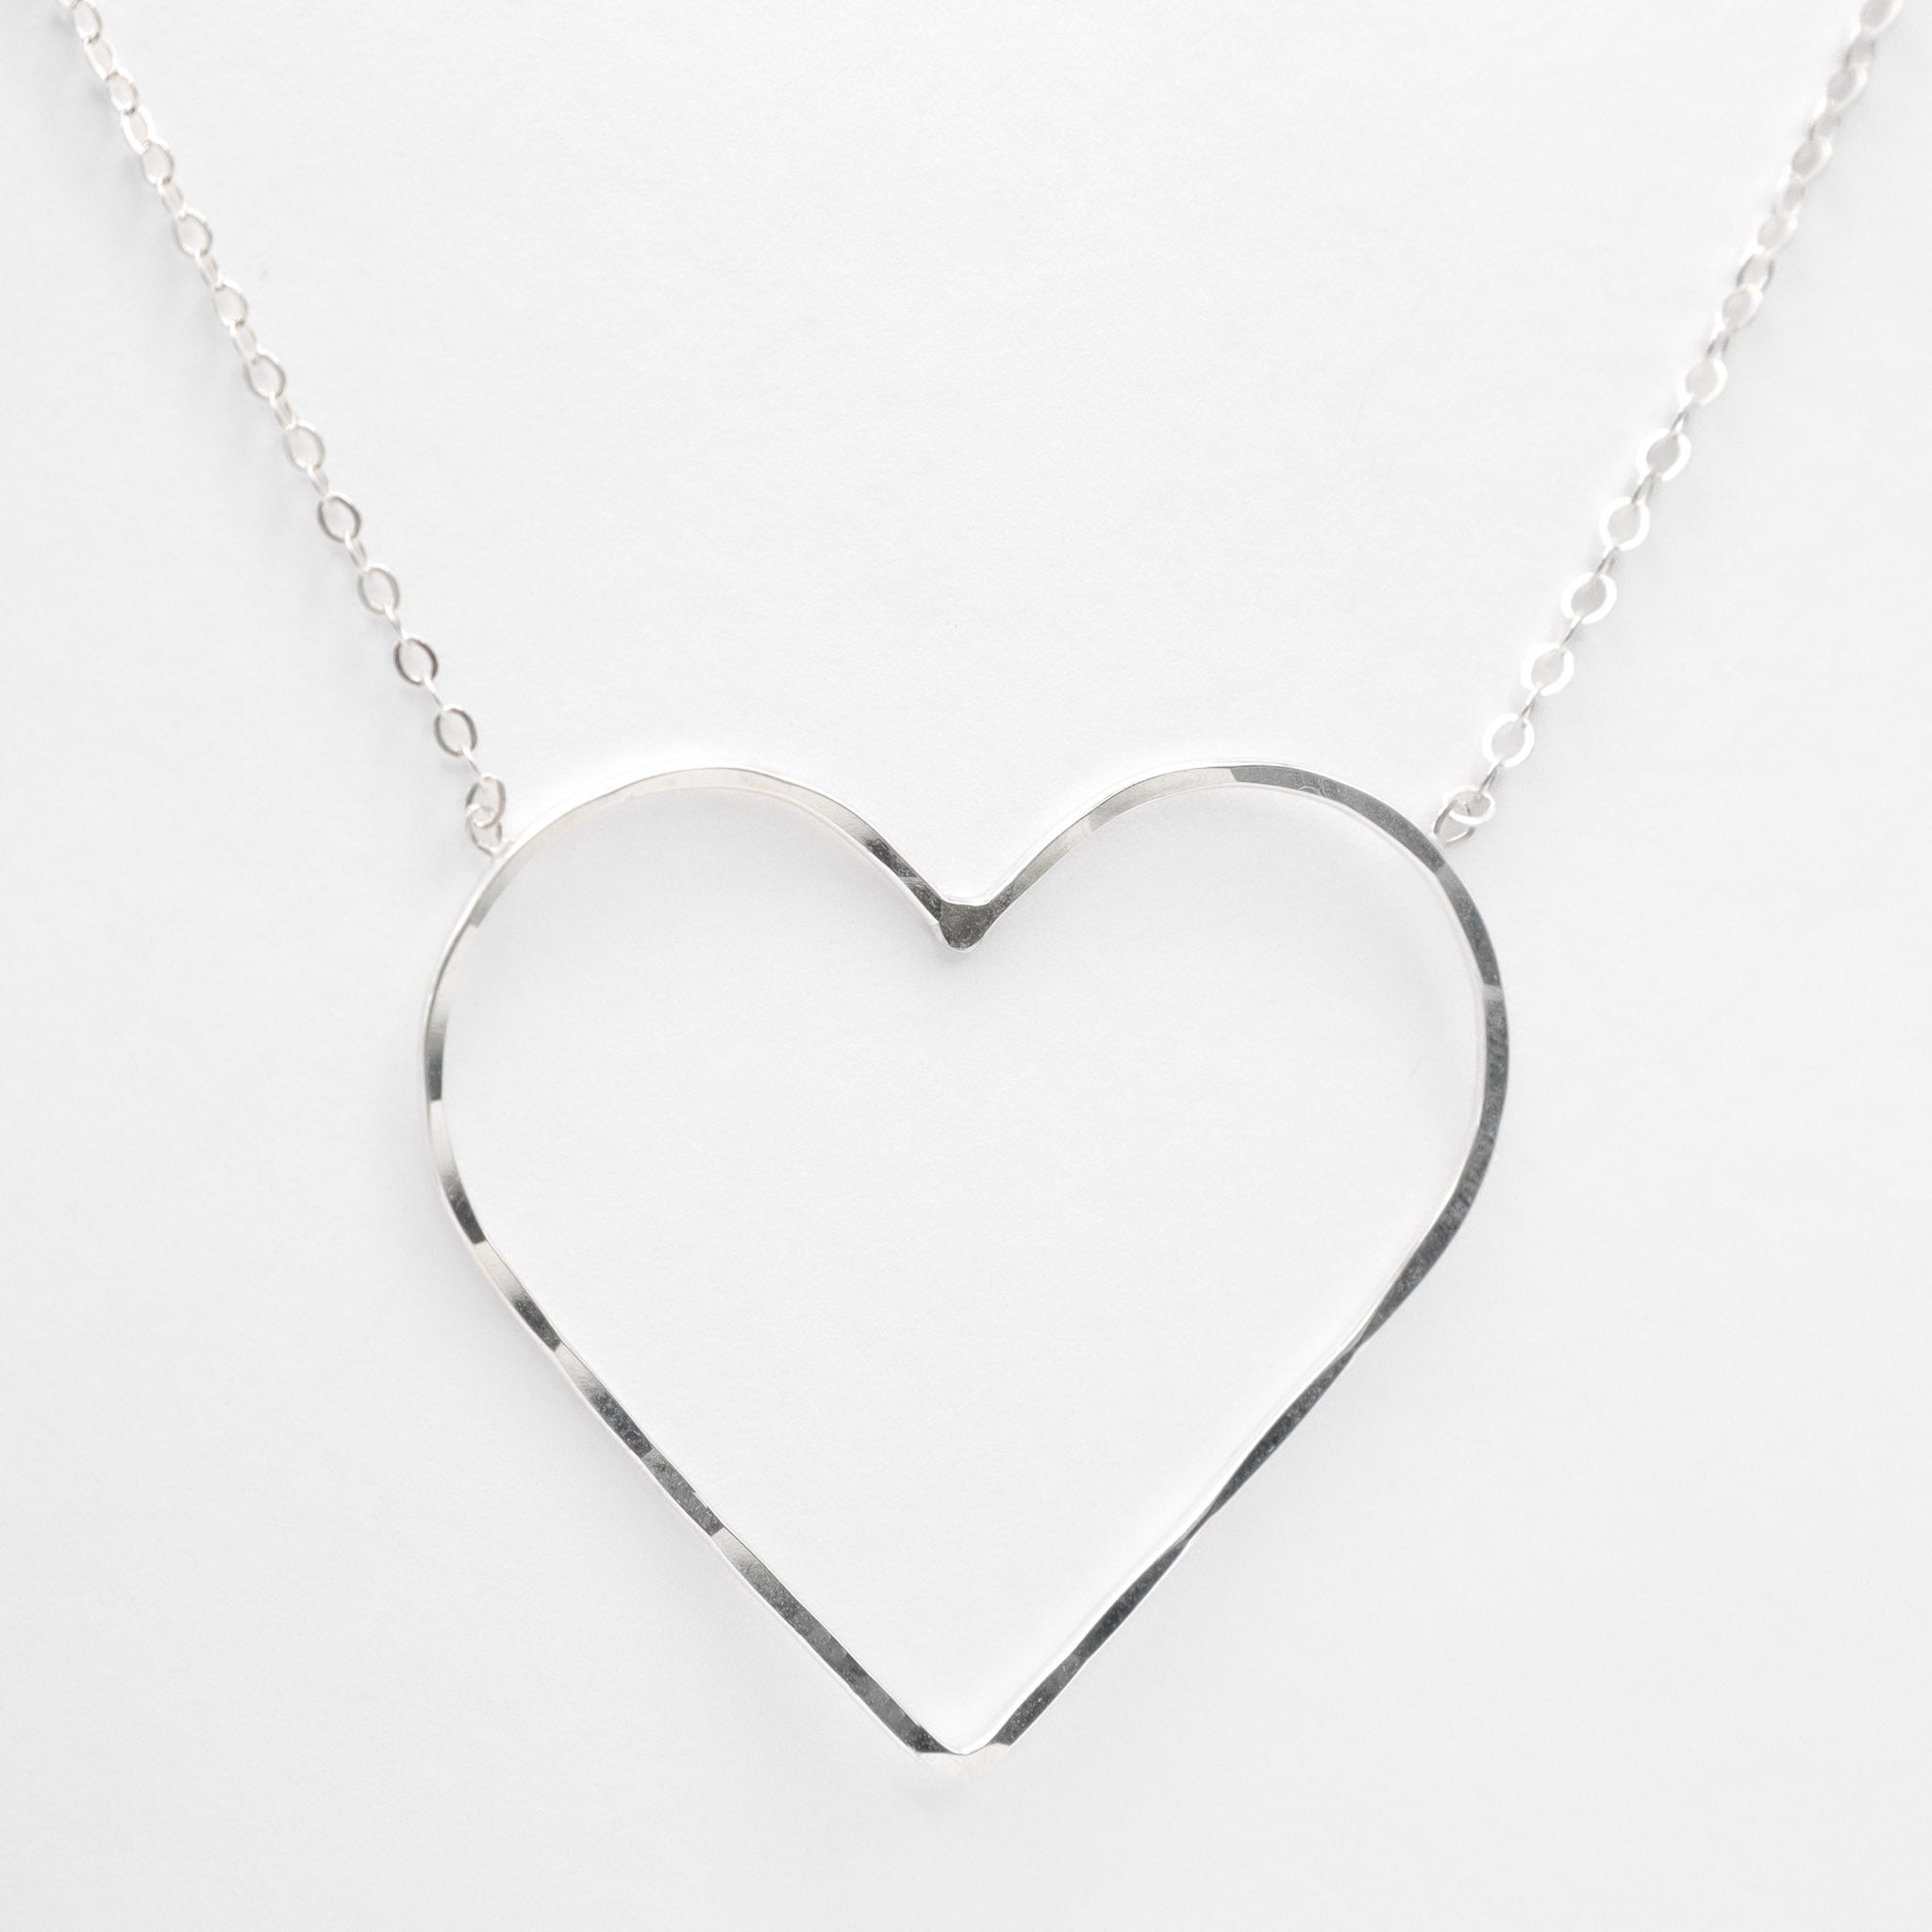 Petite Silver Lining Necklace, closeup image